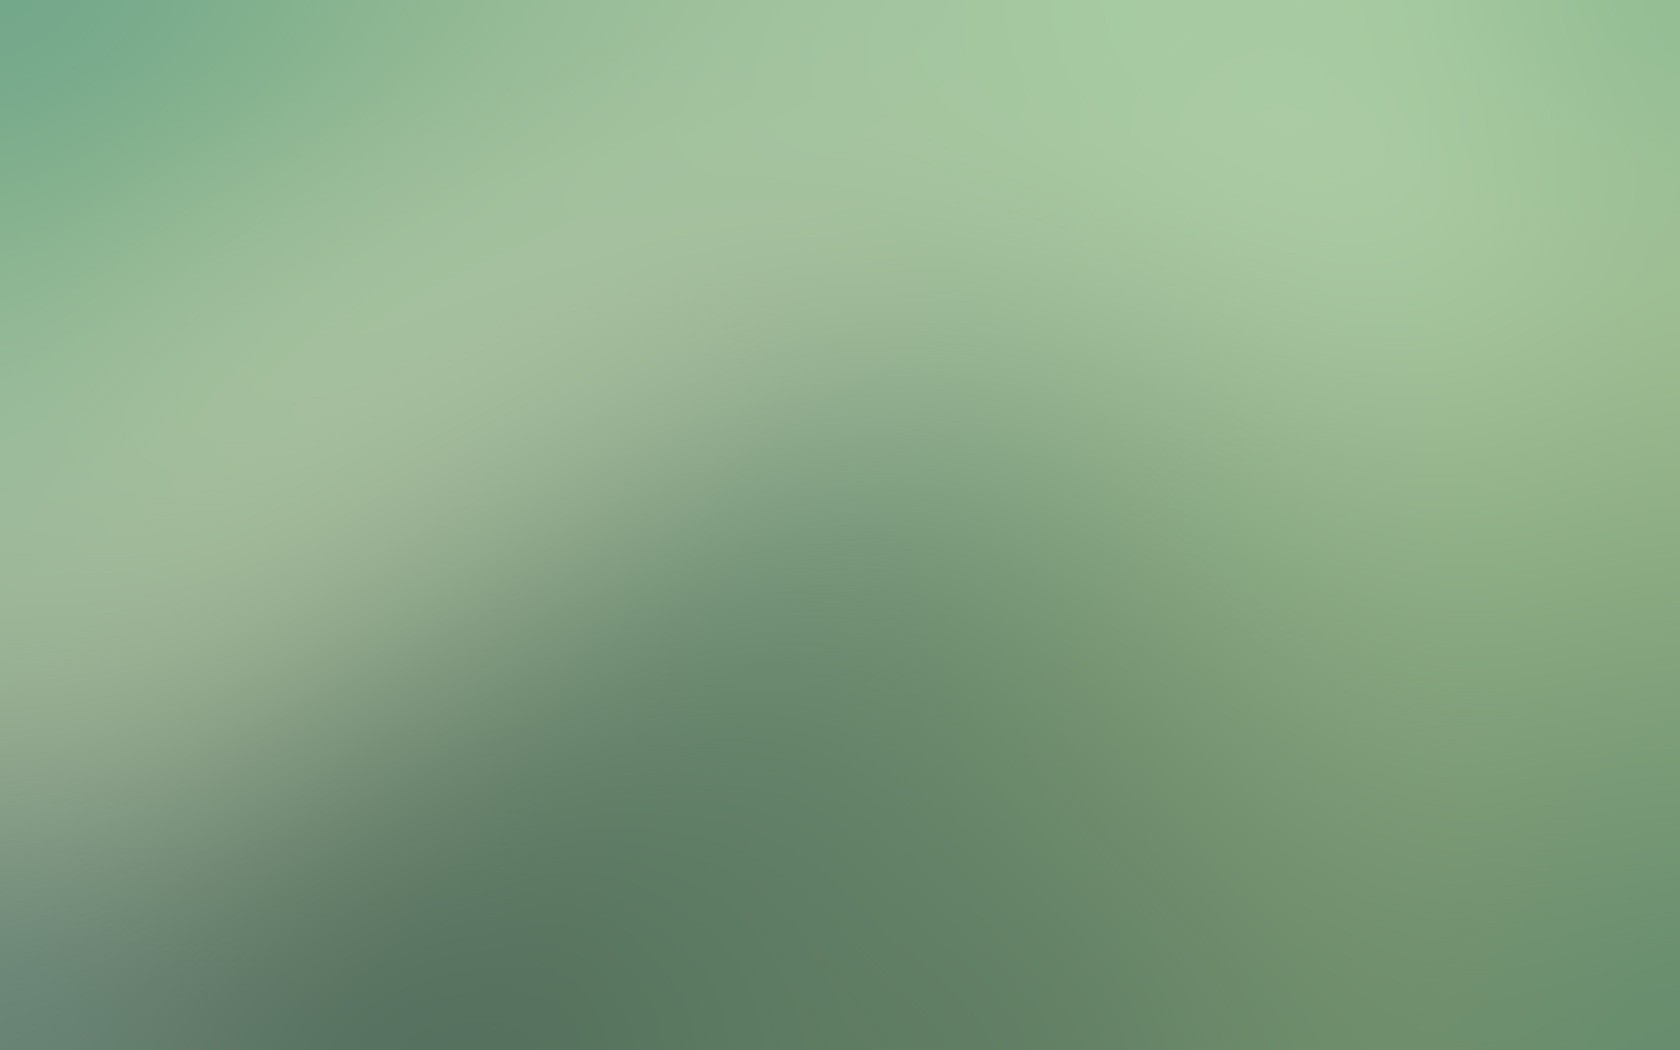 General 1680x1050 gradient green minimalism texture digital art simple background